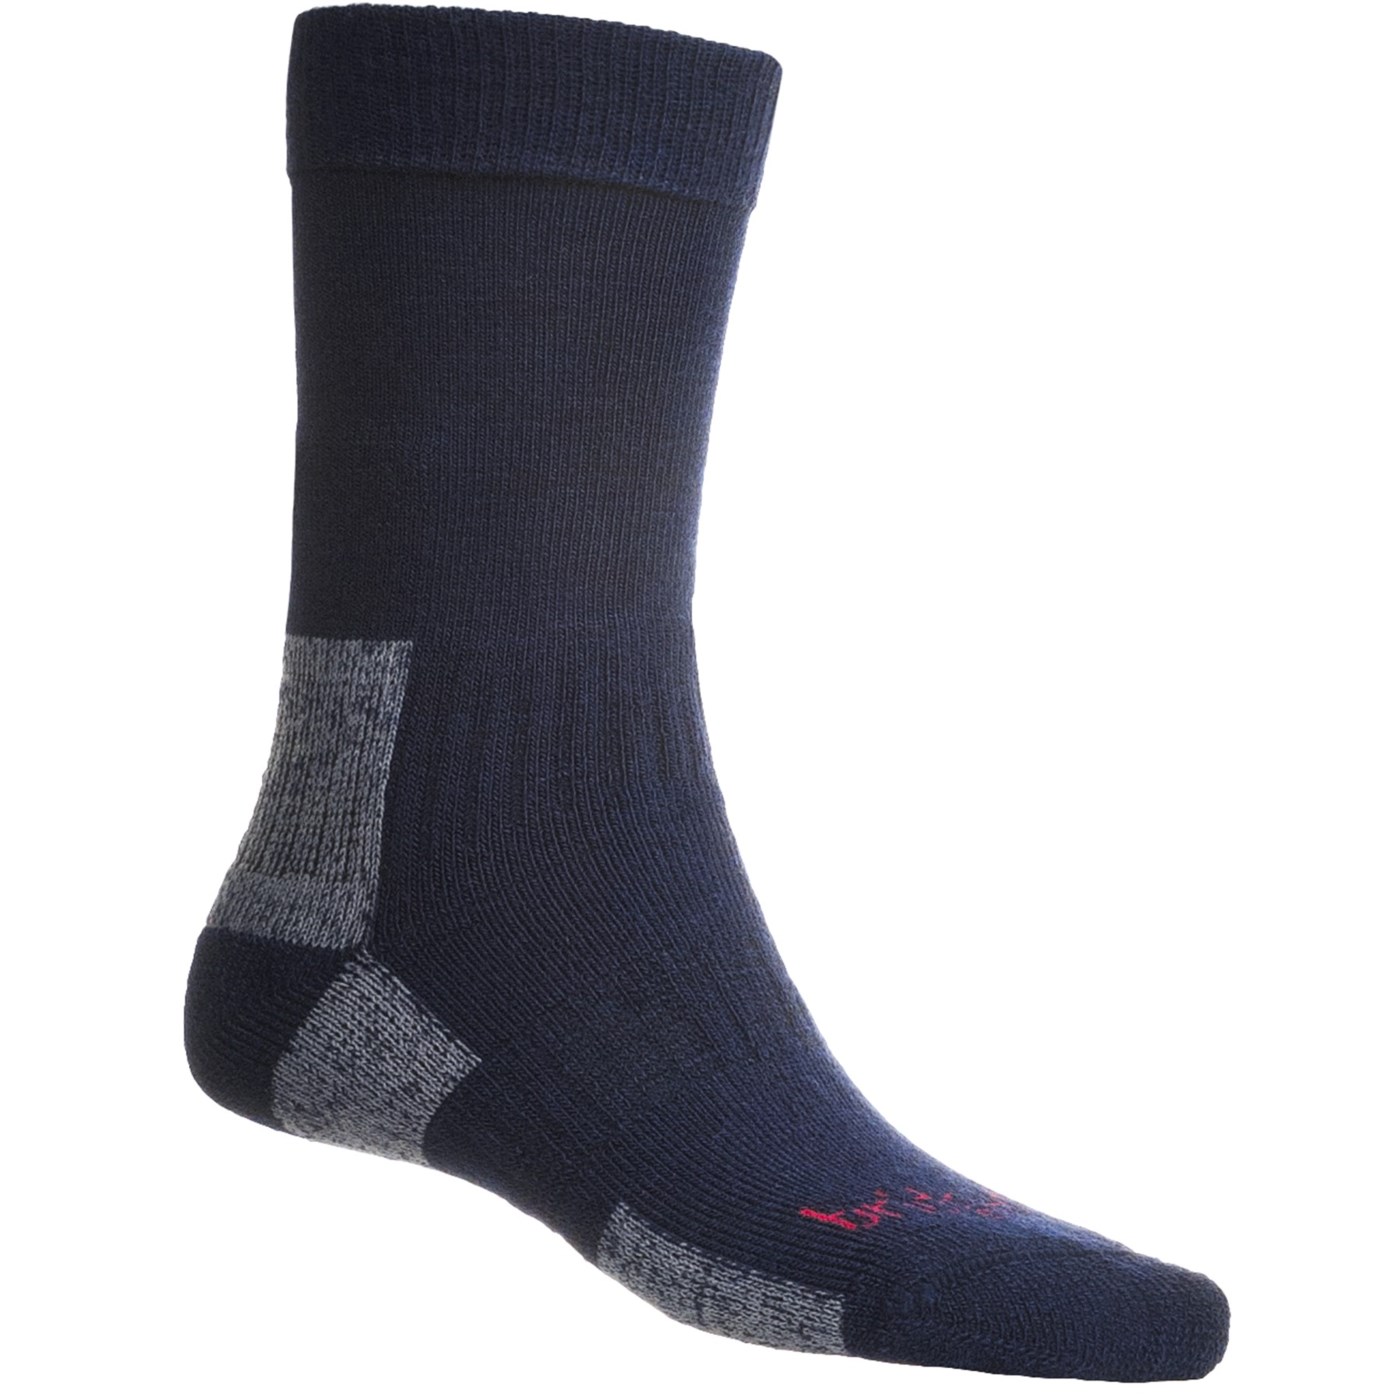 Bridgedale Midweight Hiker Socks (For Men and Women) 3285G 42